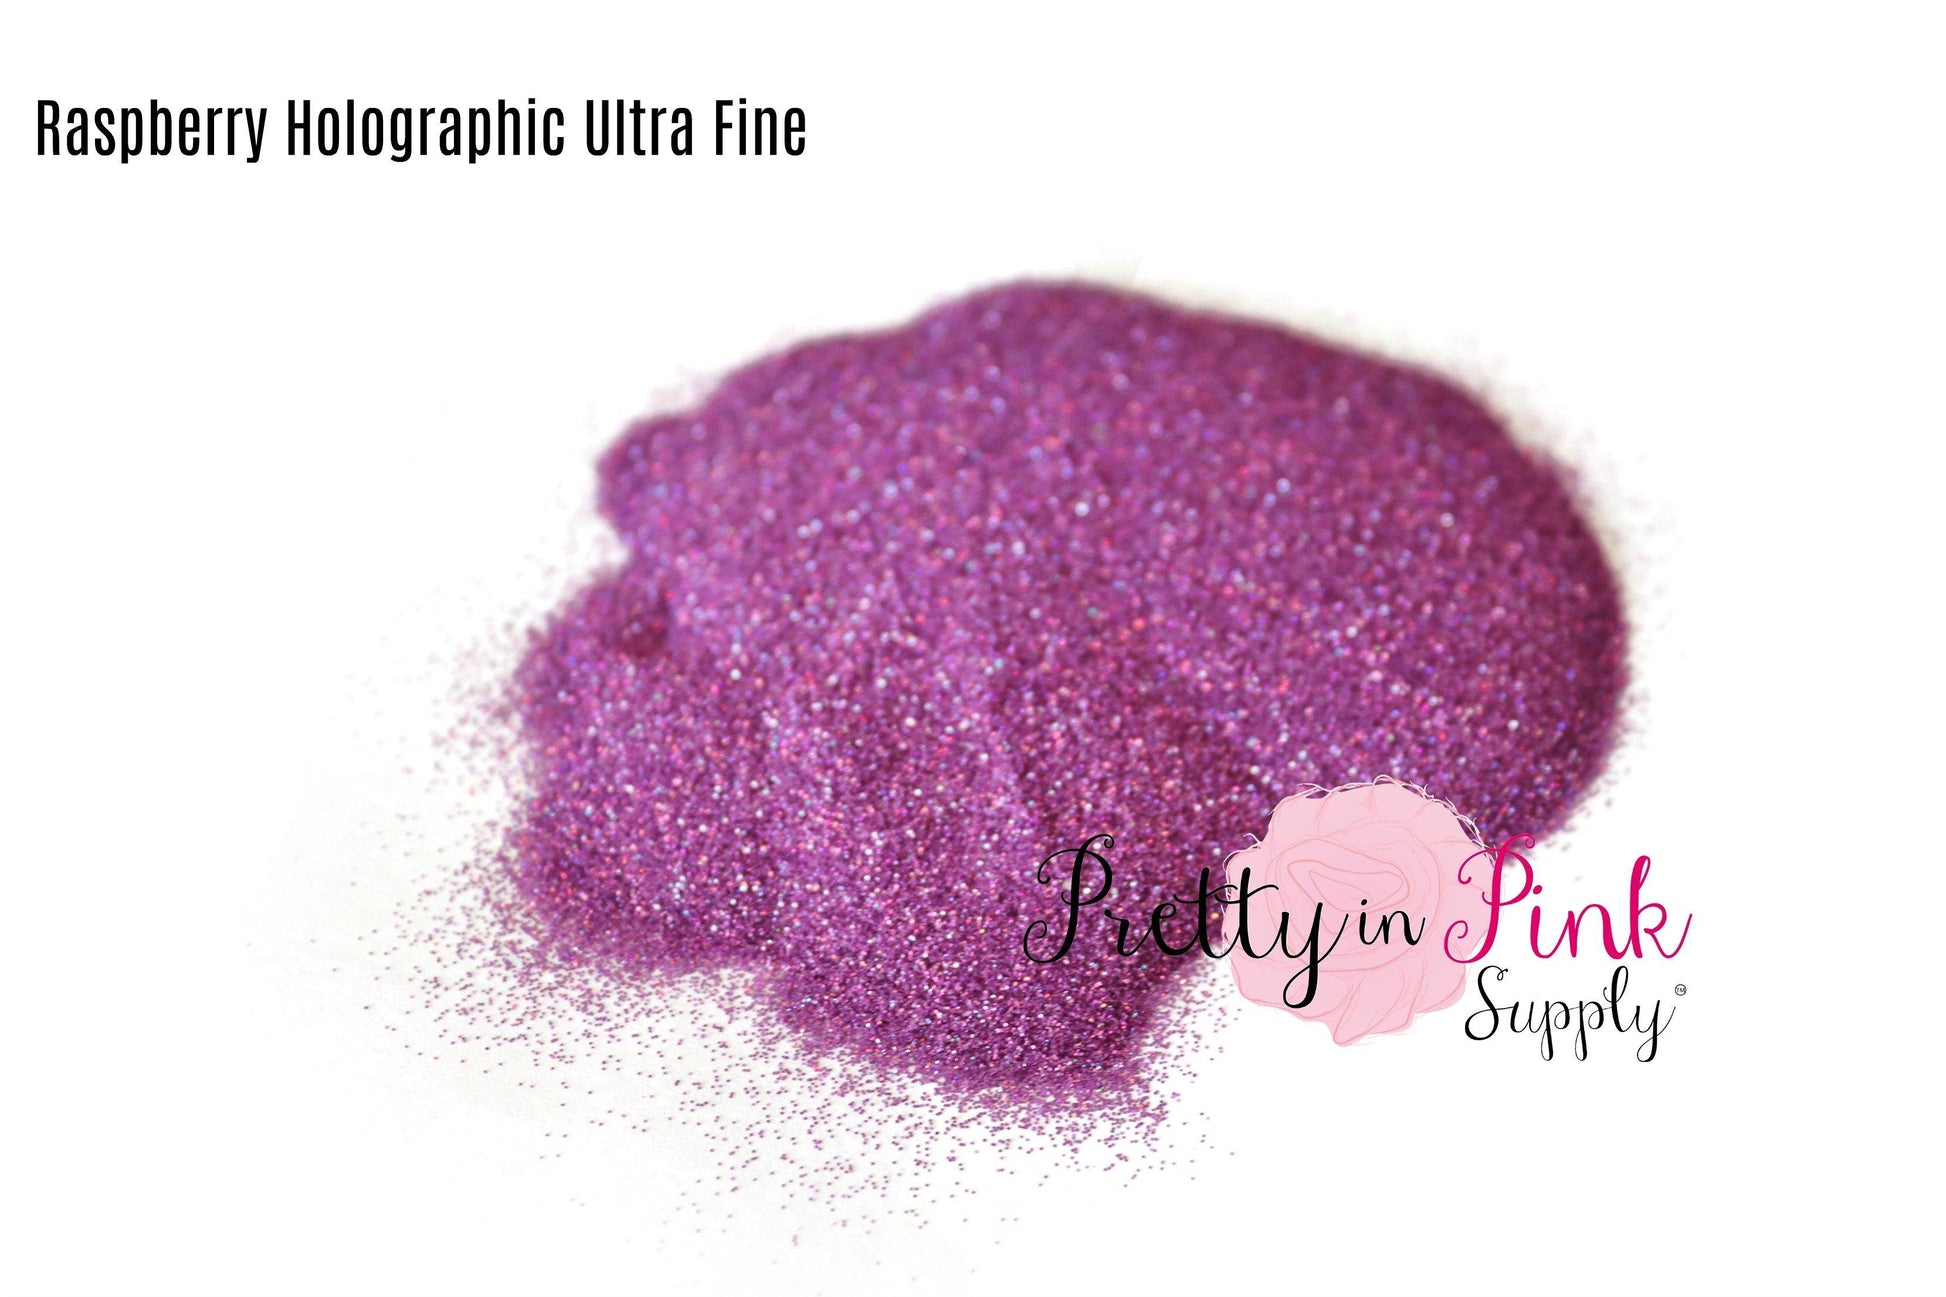 Raspberry Holographic Ultra Fine Glitter - Pretty in Pink Supply